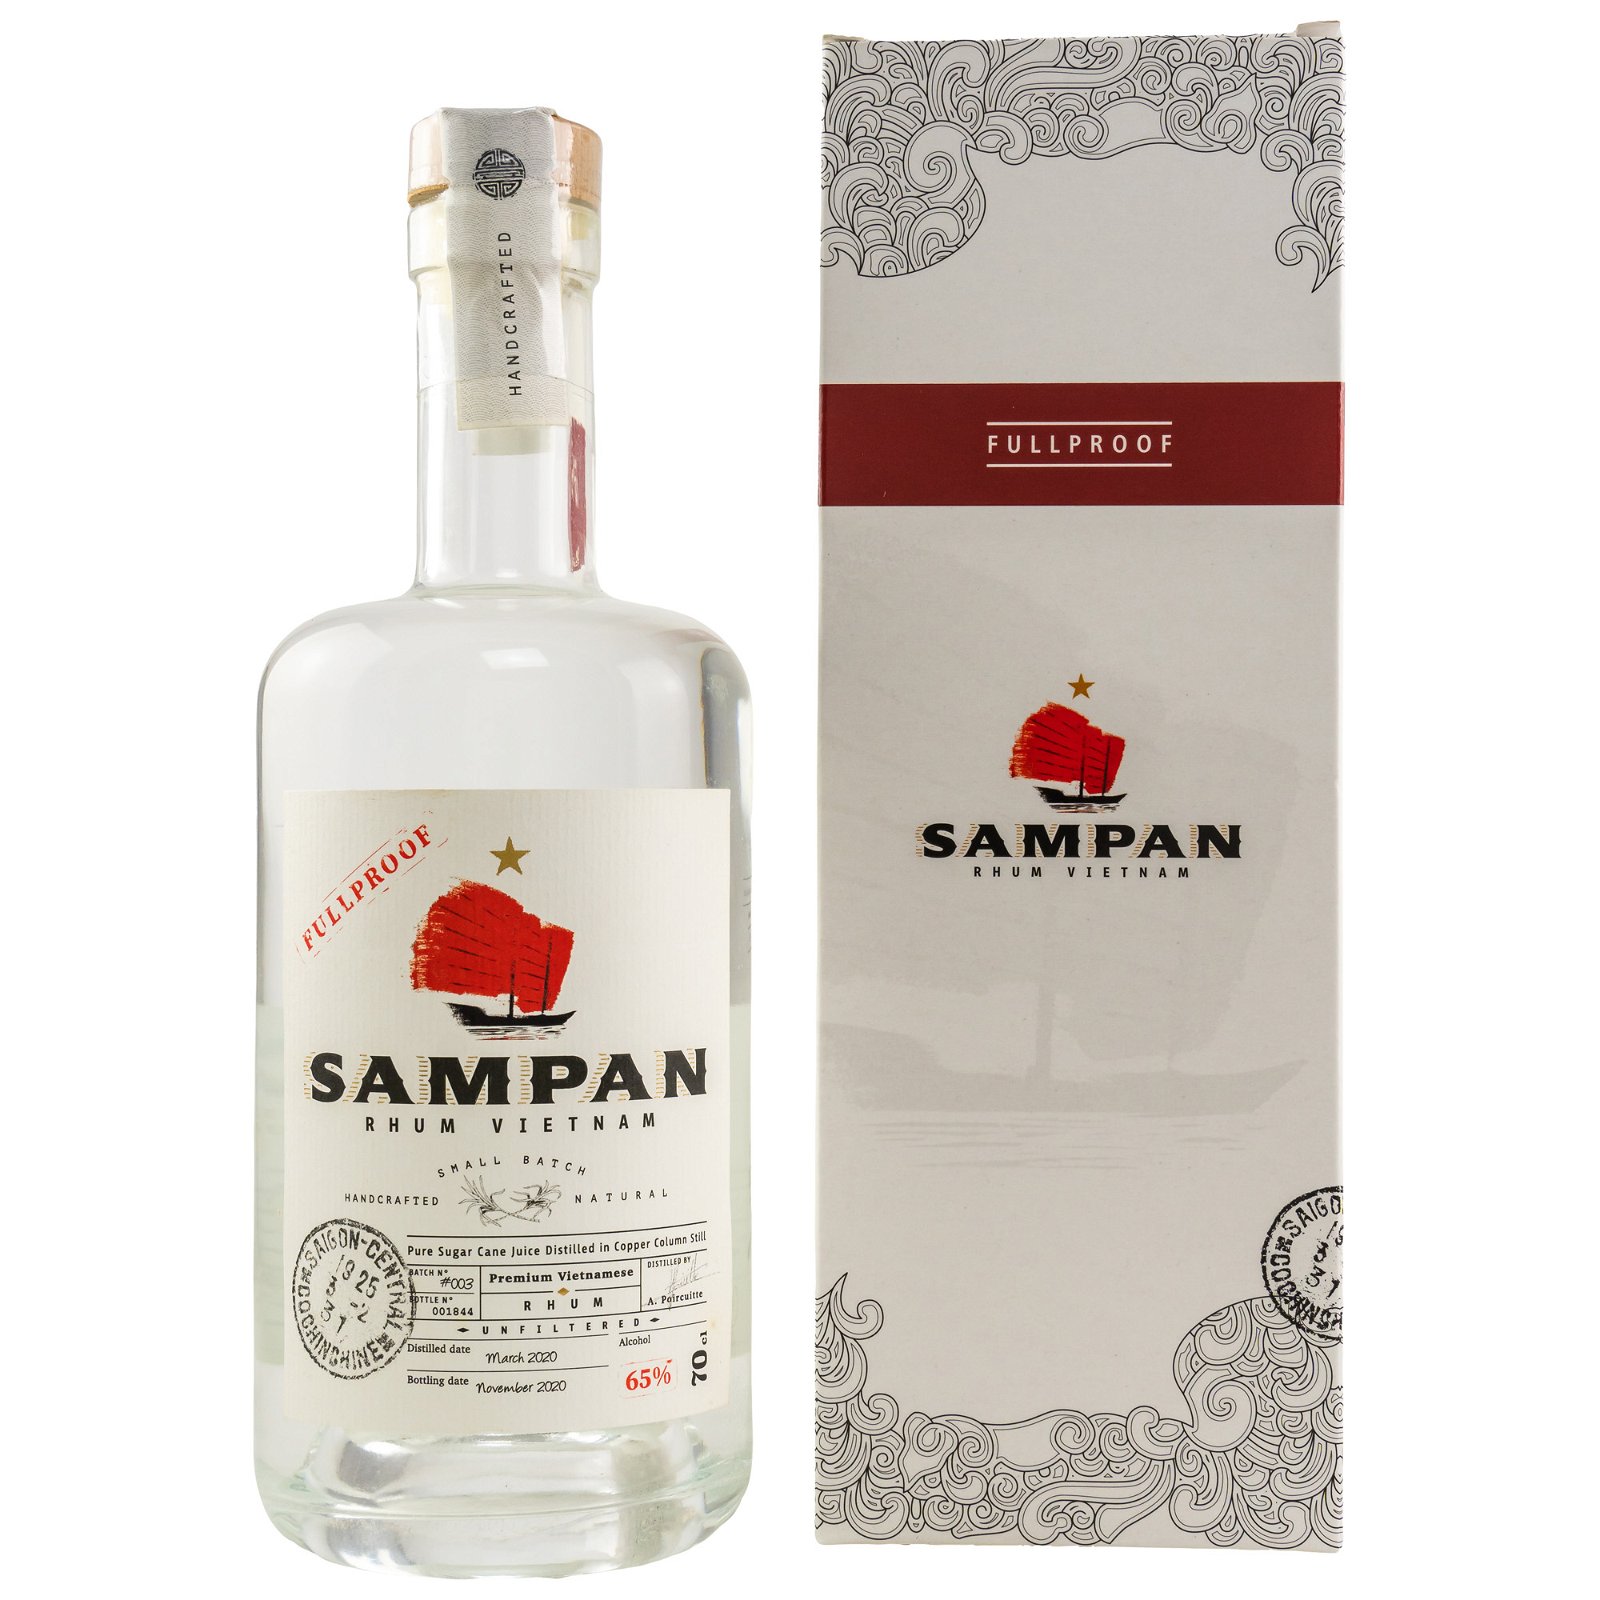 SAMPAN Classic White Rhum 65%